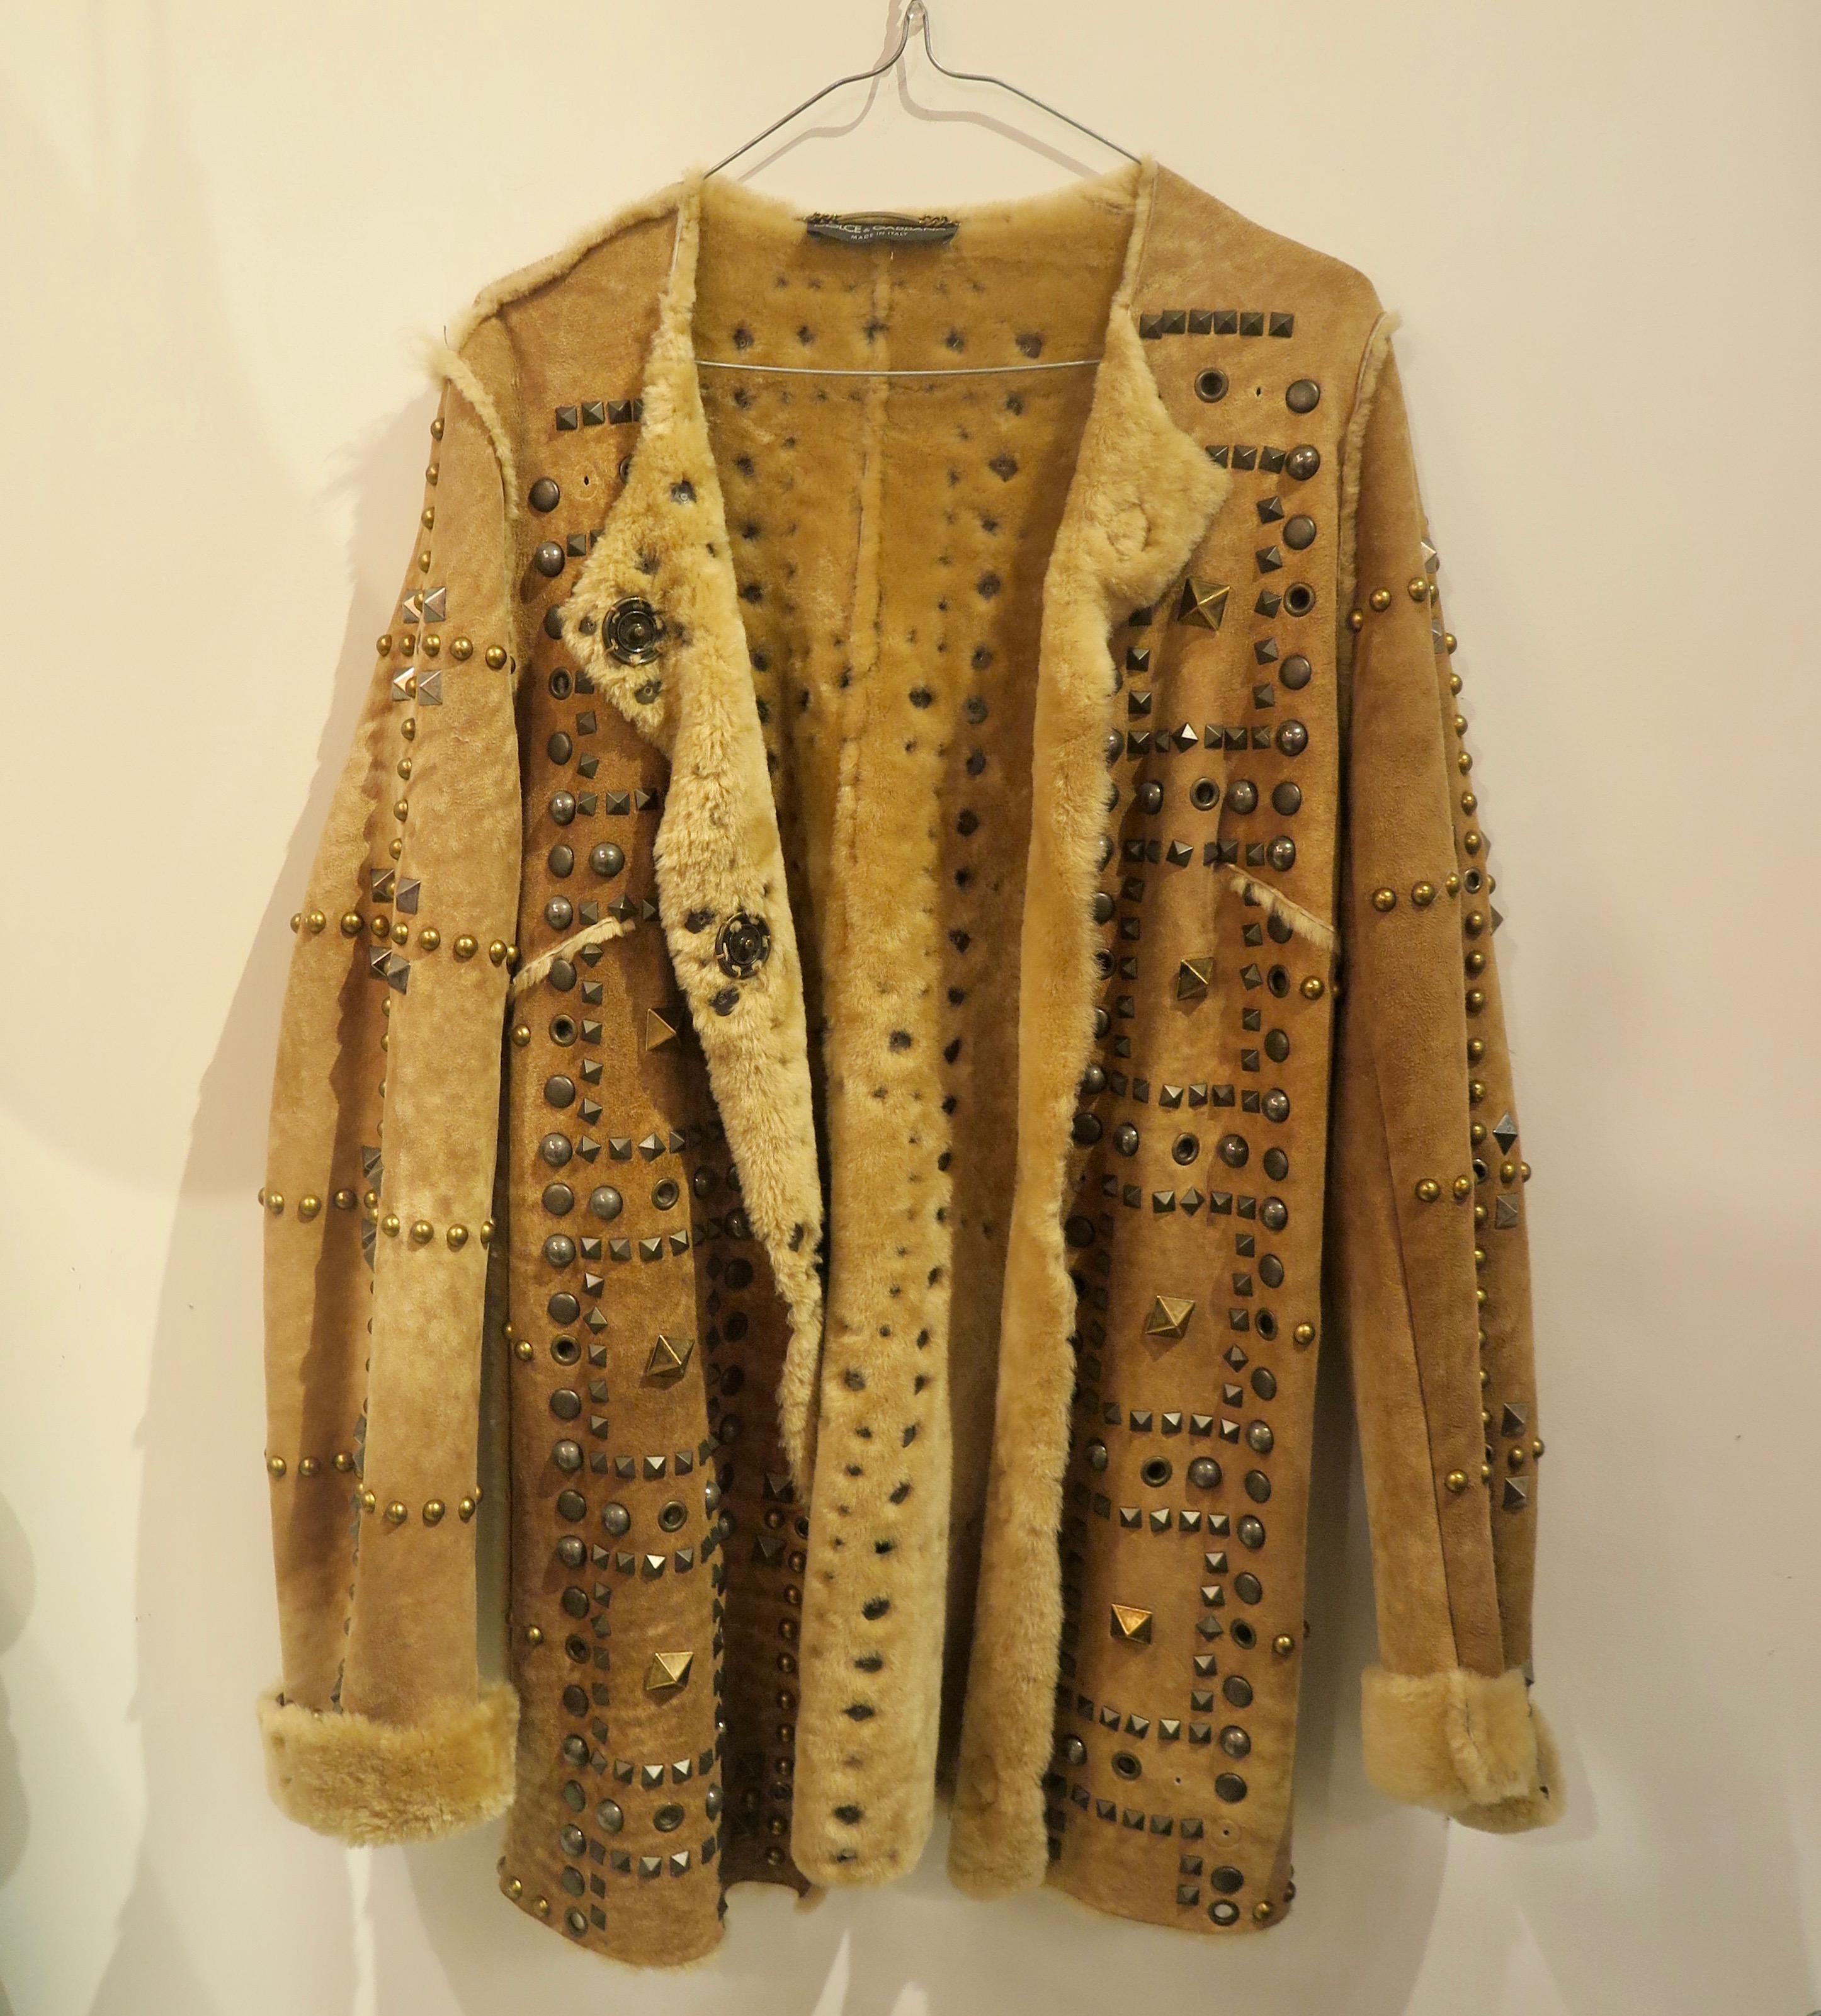 Studded sheepskin shearling coat / jacket by Dolce & Gabbana, Italy, ca 2000.